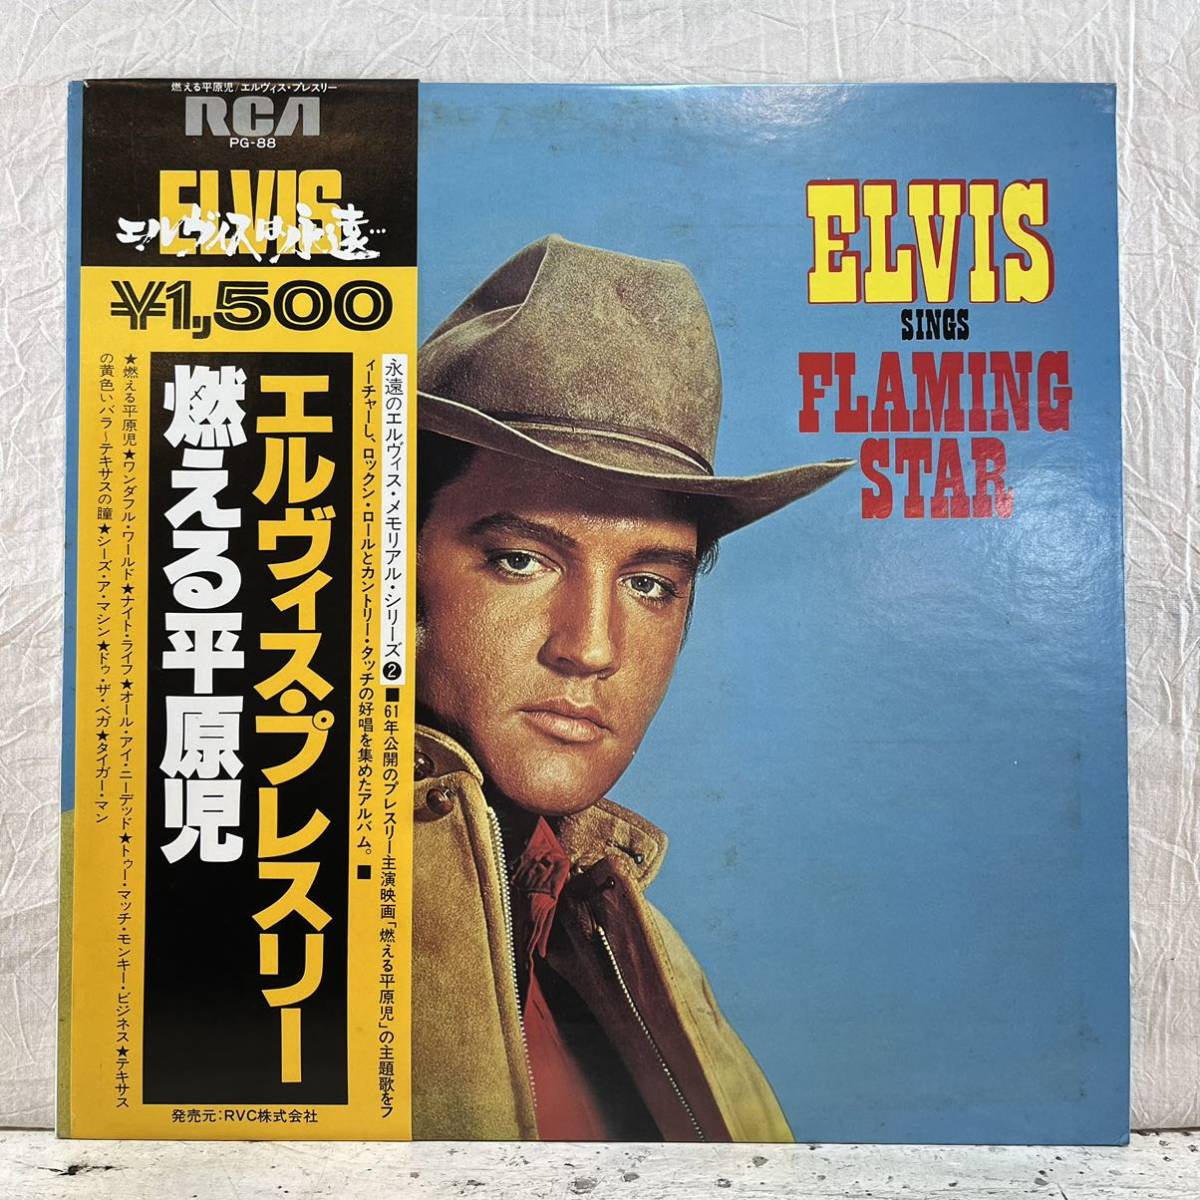 LP 帯付き エルヴィス・プレスリー Elvis Presley 燃える平原児 Elvis Sings “Flaming Star” PG-88_画像1